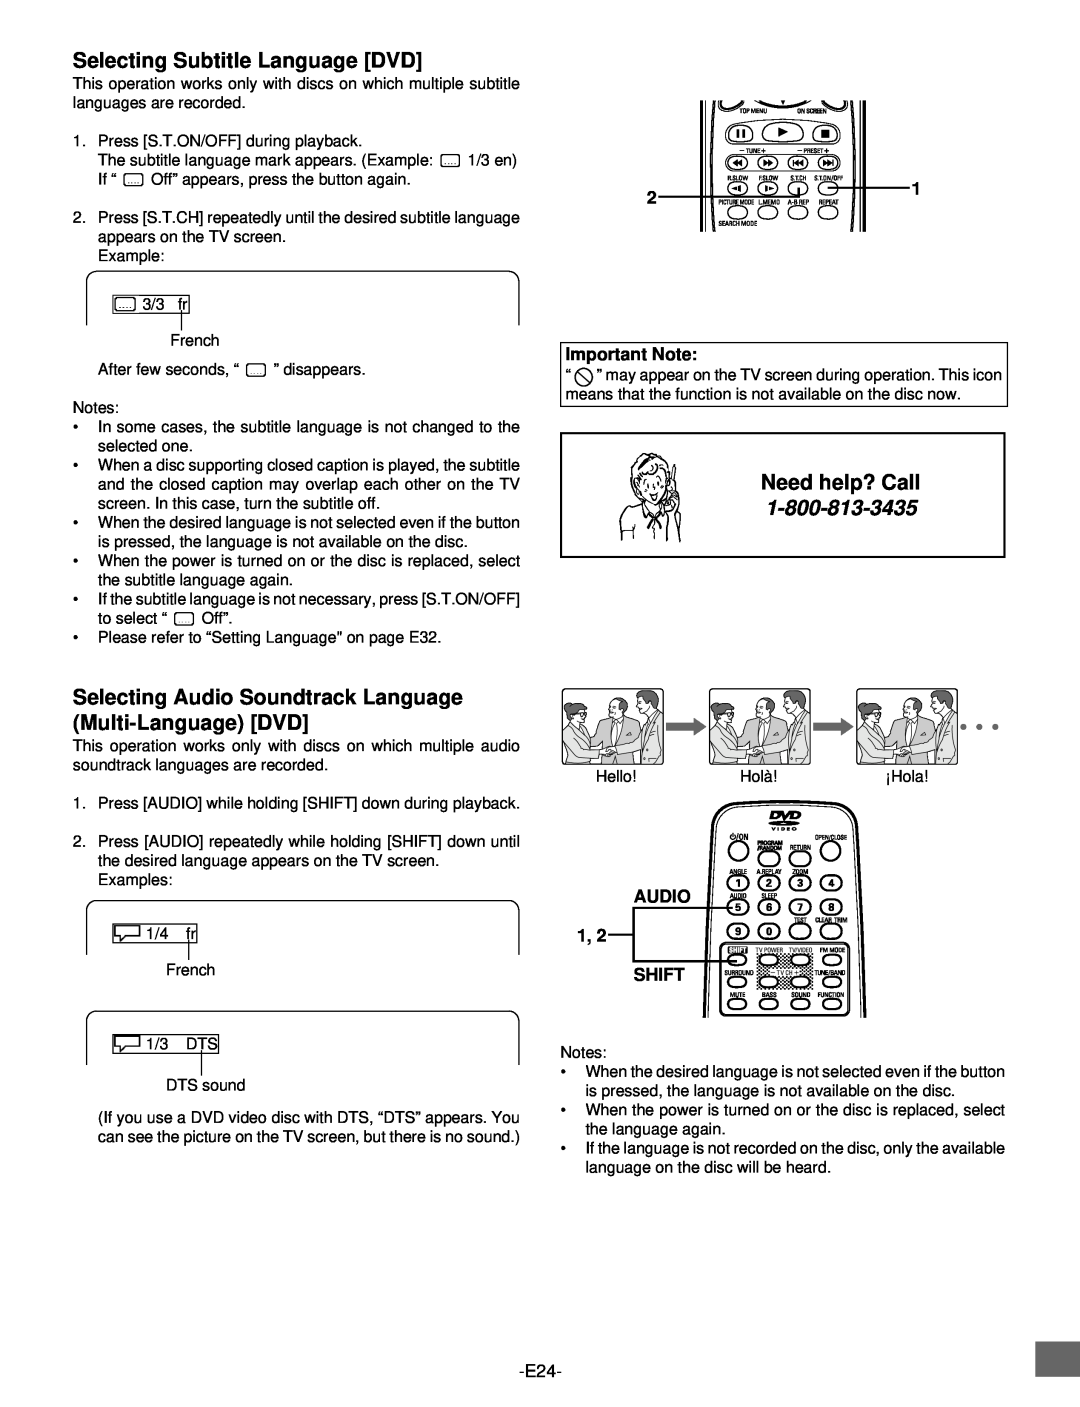 Sanyo DWM-2500 instruction manual Selecting Subtitle Language DVD, Need help? Call, Important Note, AUDIO 1, SHIFT 